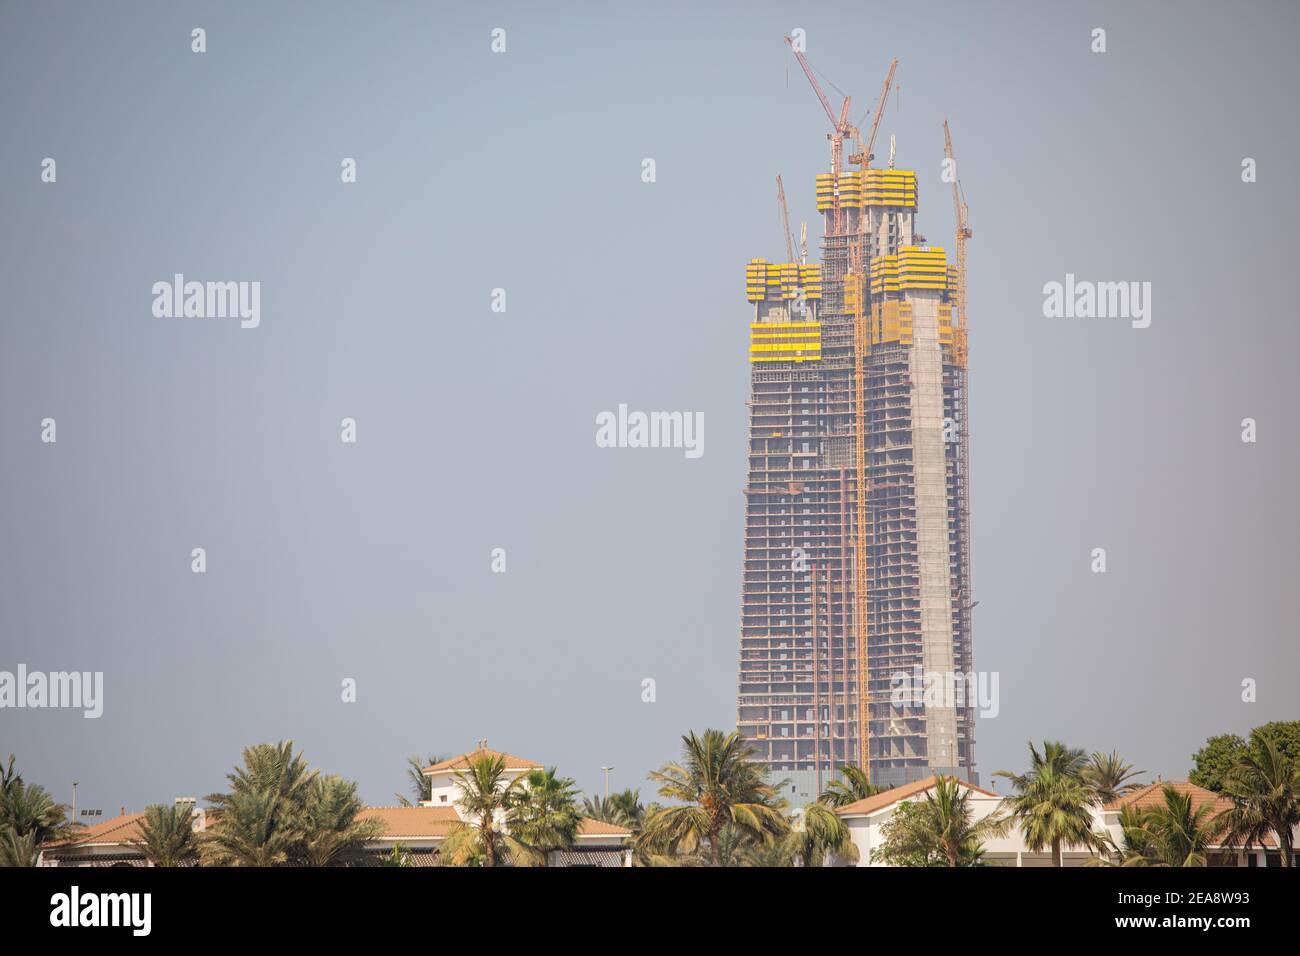 Kingdom Tower en construction, Djeddah, arabie saoudite, 2019 Banque D'Images